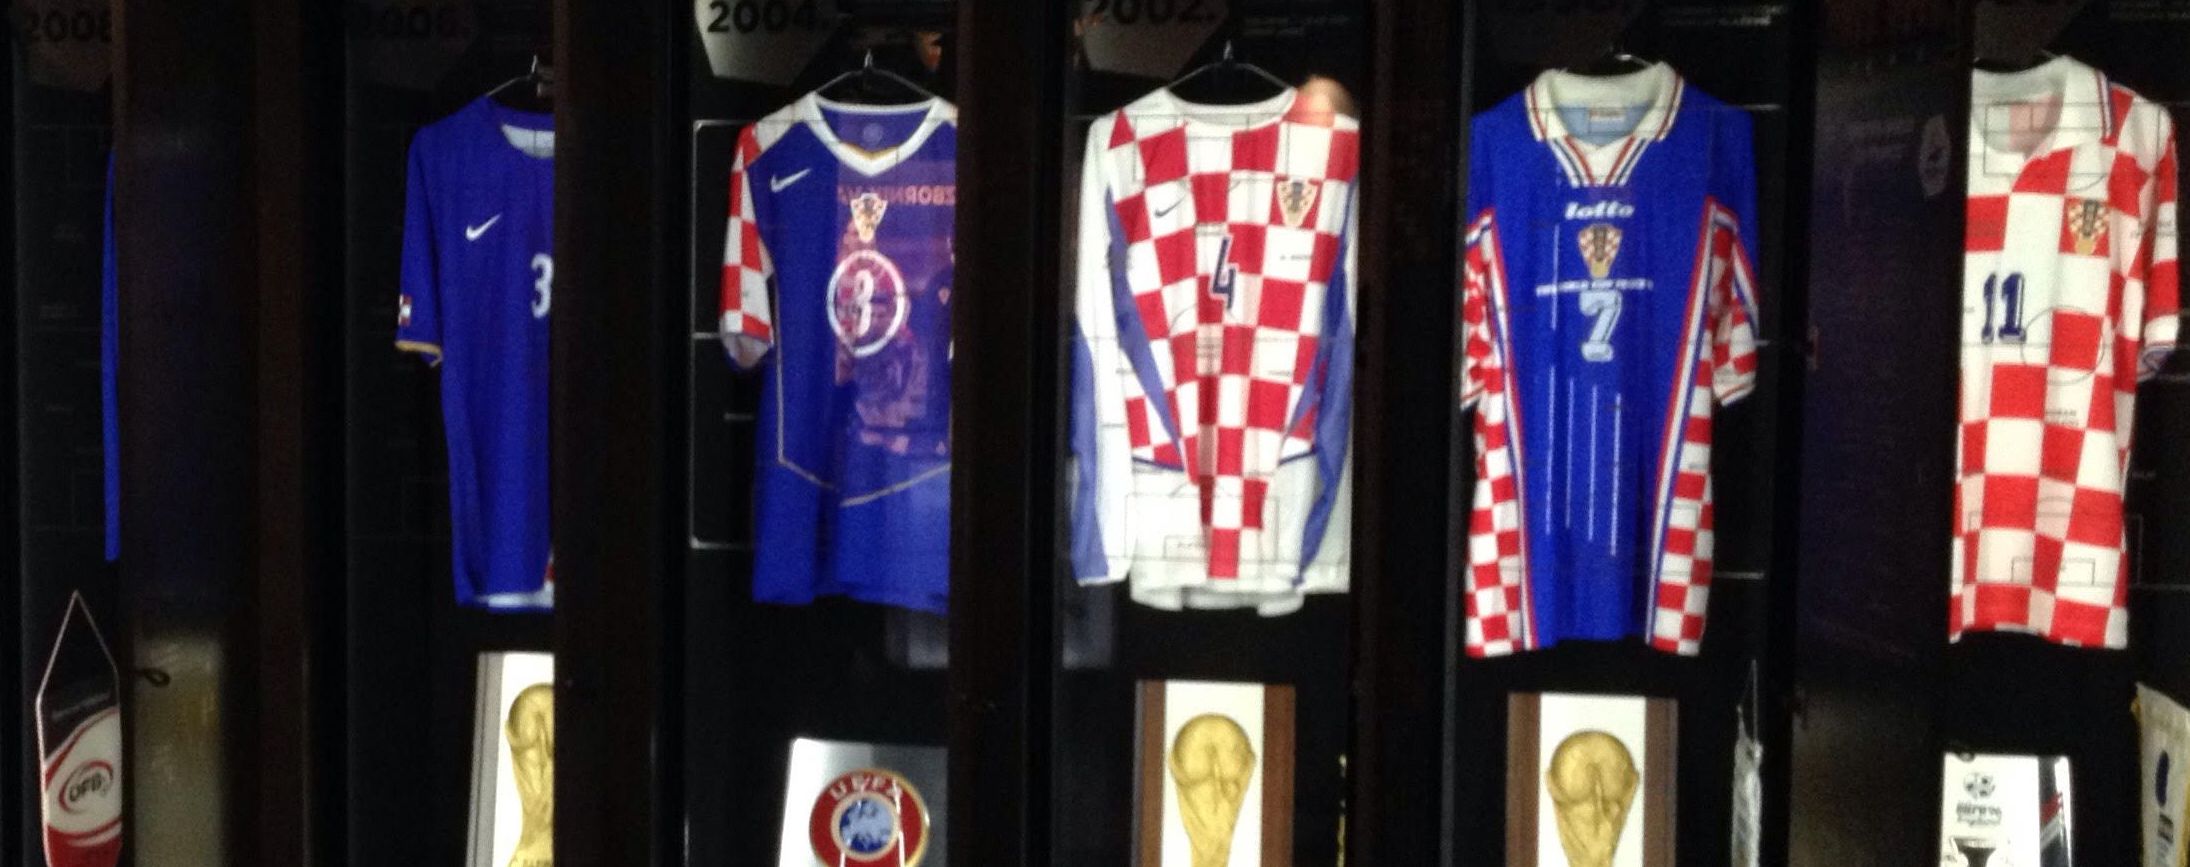 [PHOTOS] Photo Tour of the Croatian Football ‘Museum’